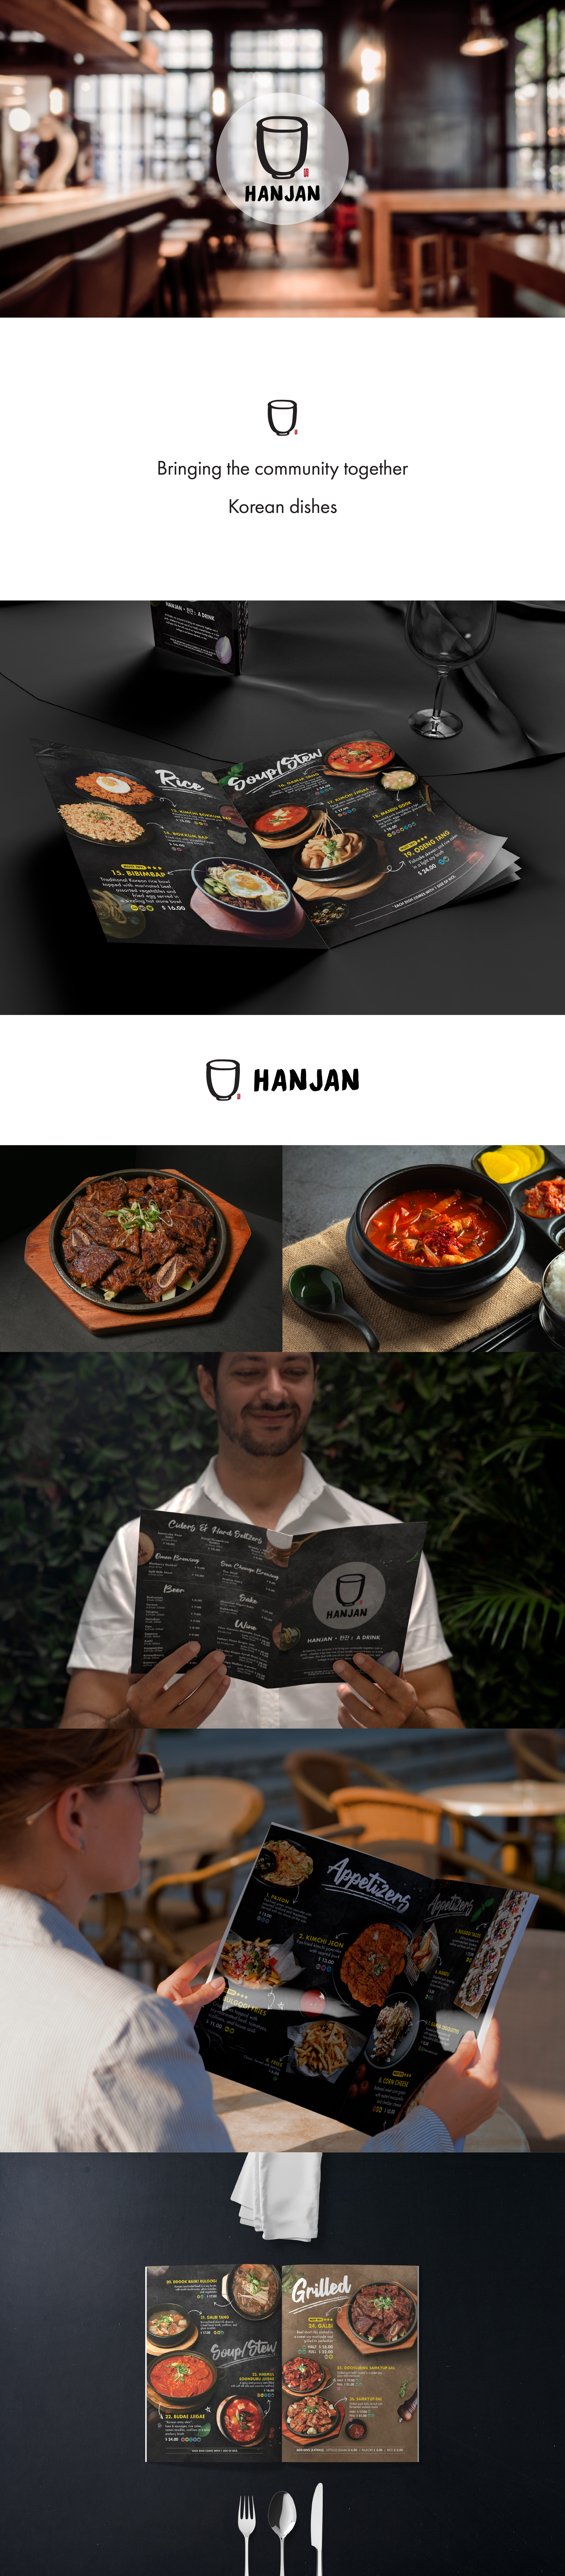 Hanjan_web-01